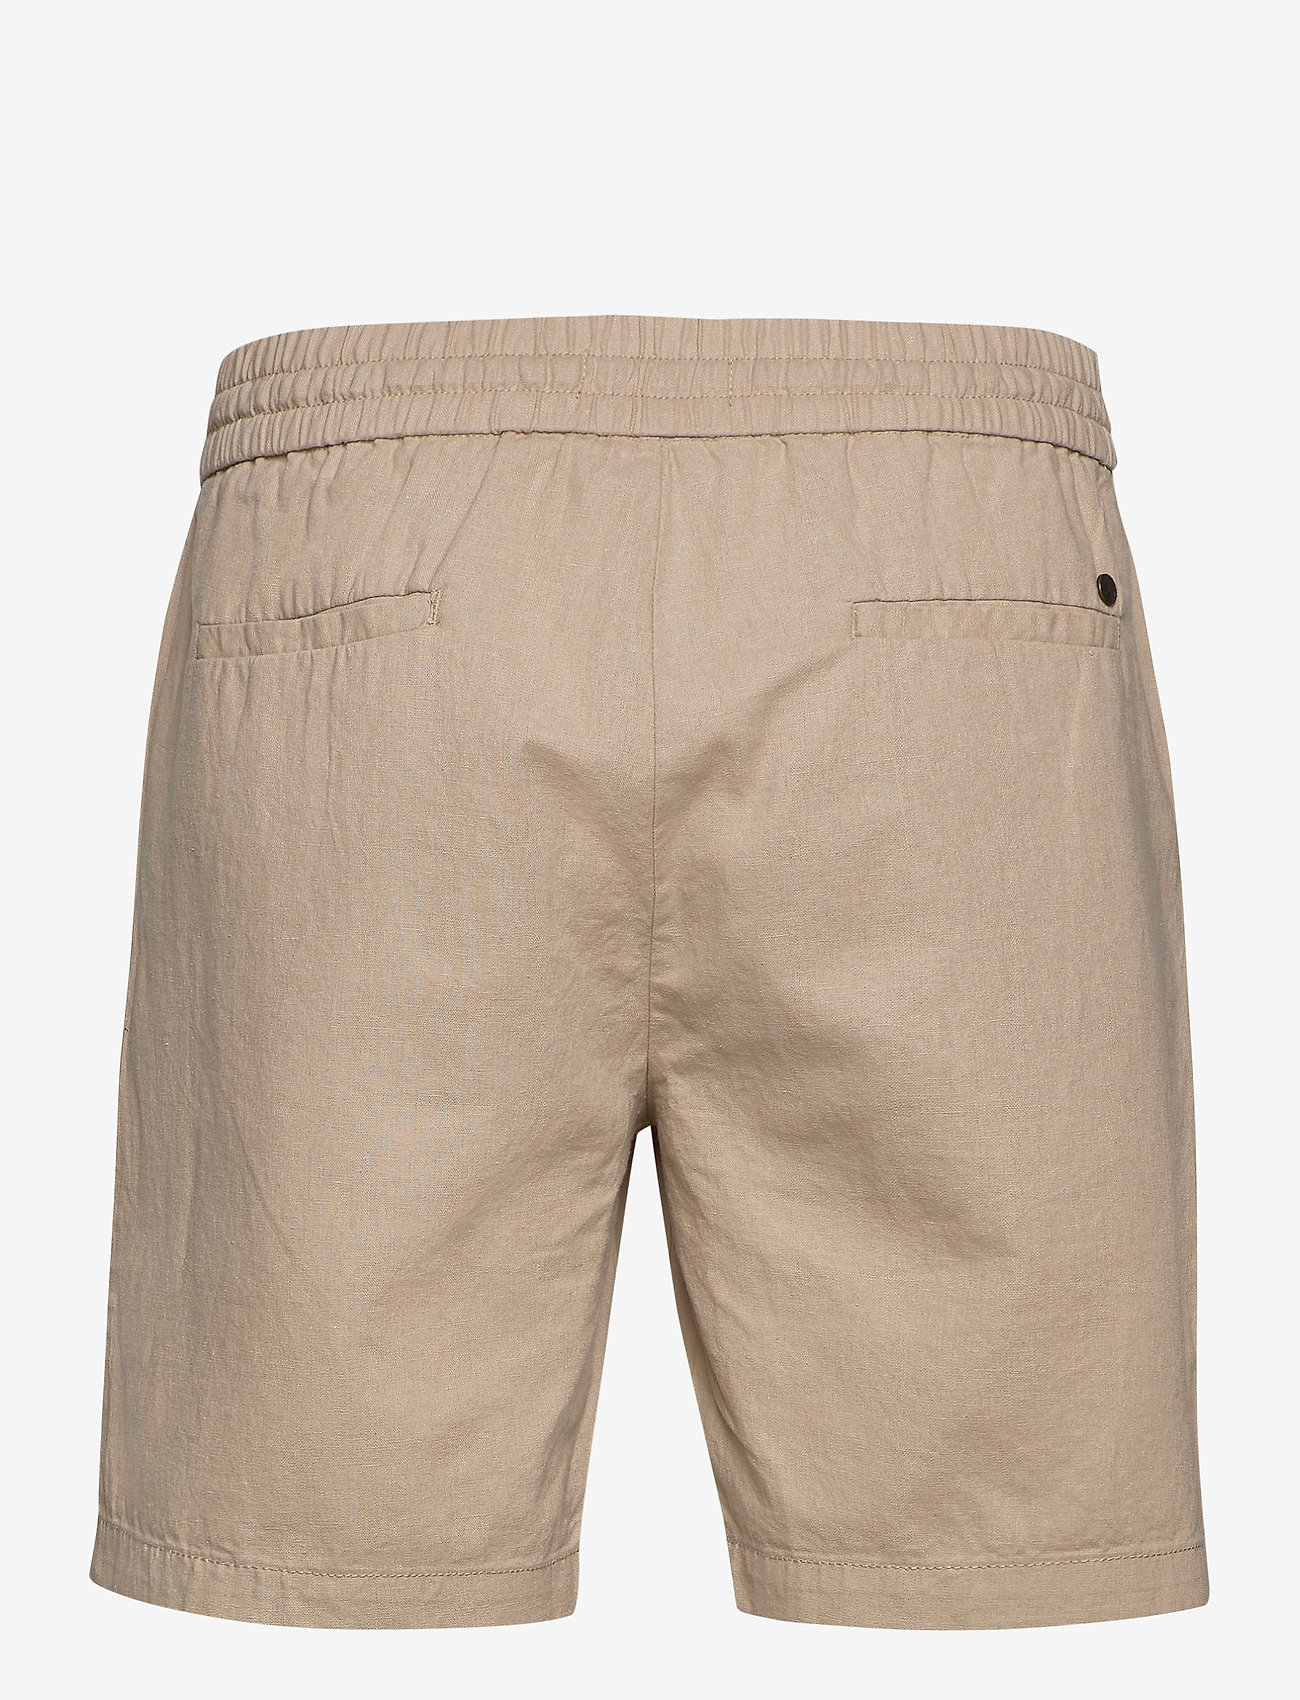 Clean Cut Copenhagen - Barcelona Cotton / Linen Shorts - leinen-shorts - khaki - 1